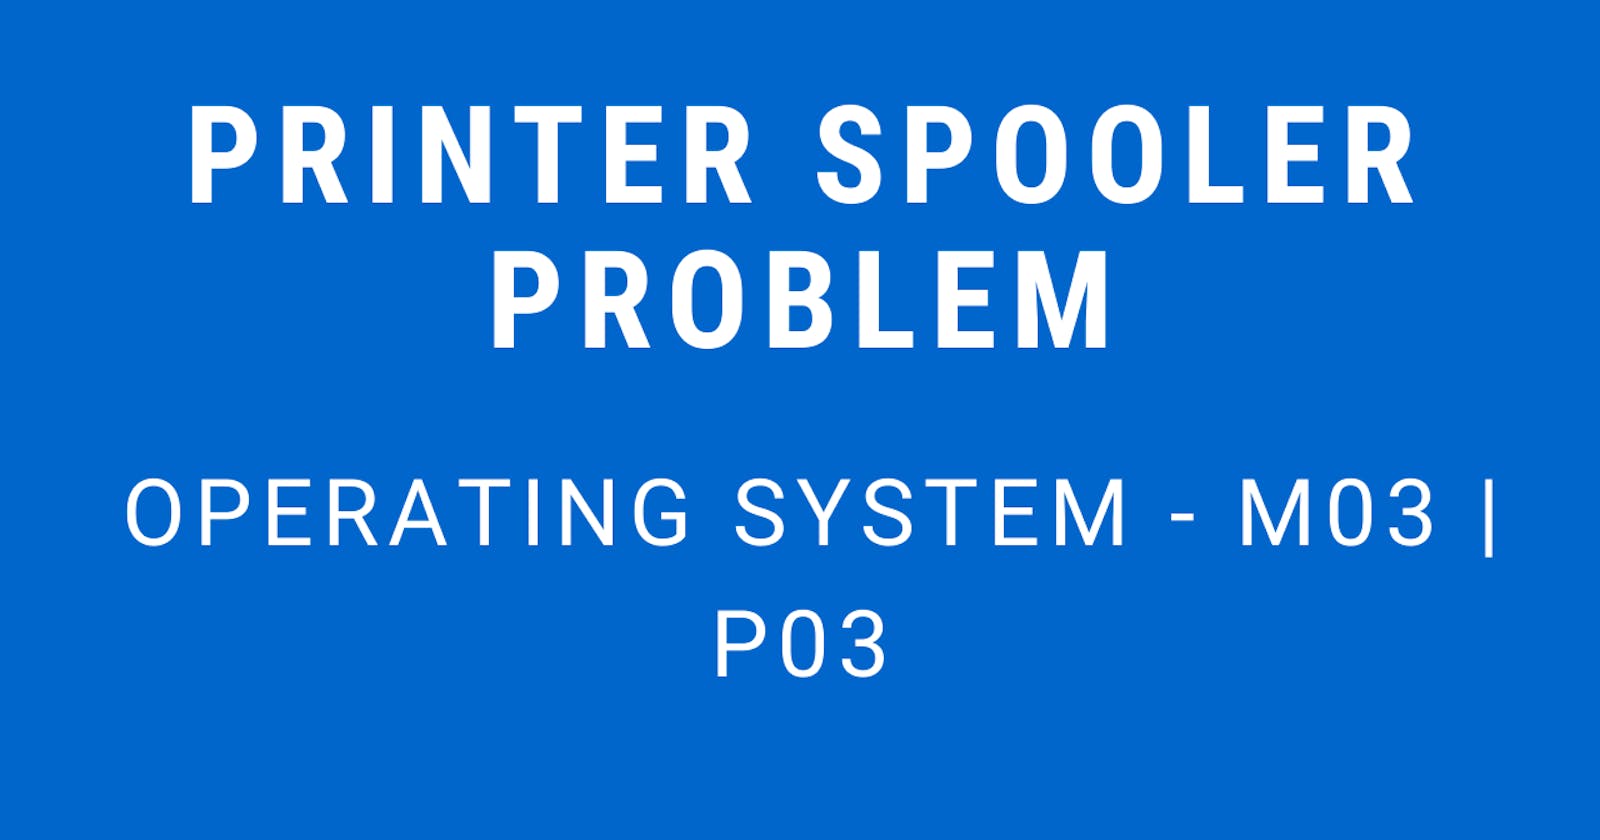 Printer Spooler Problem | Operating System - M03 P03